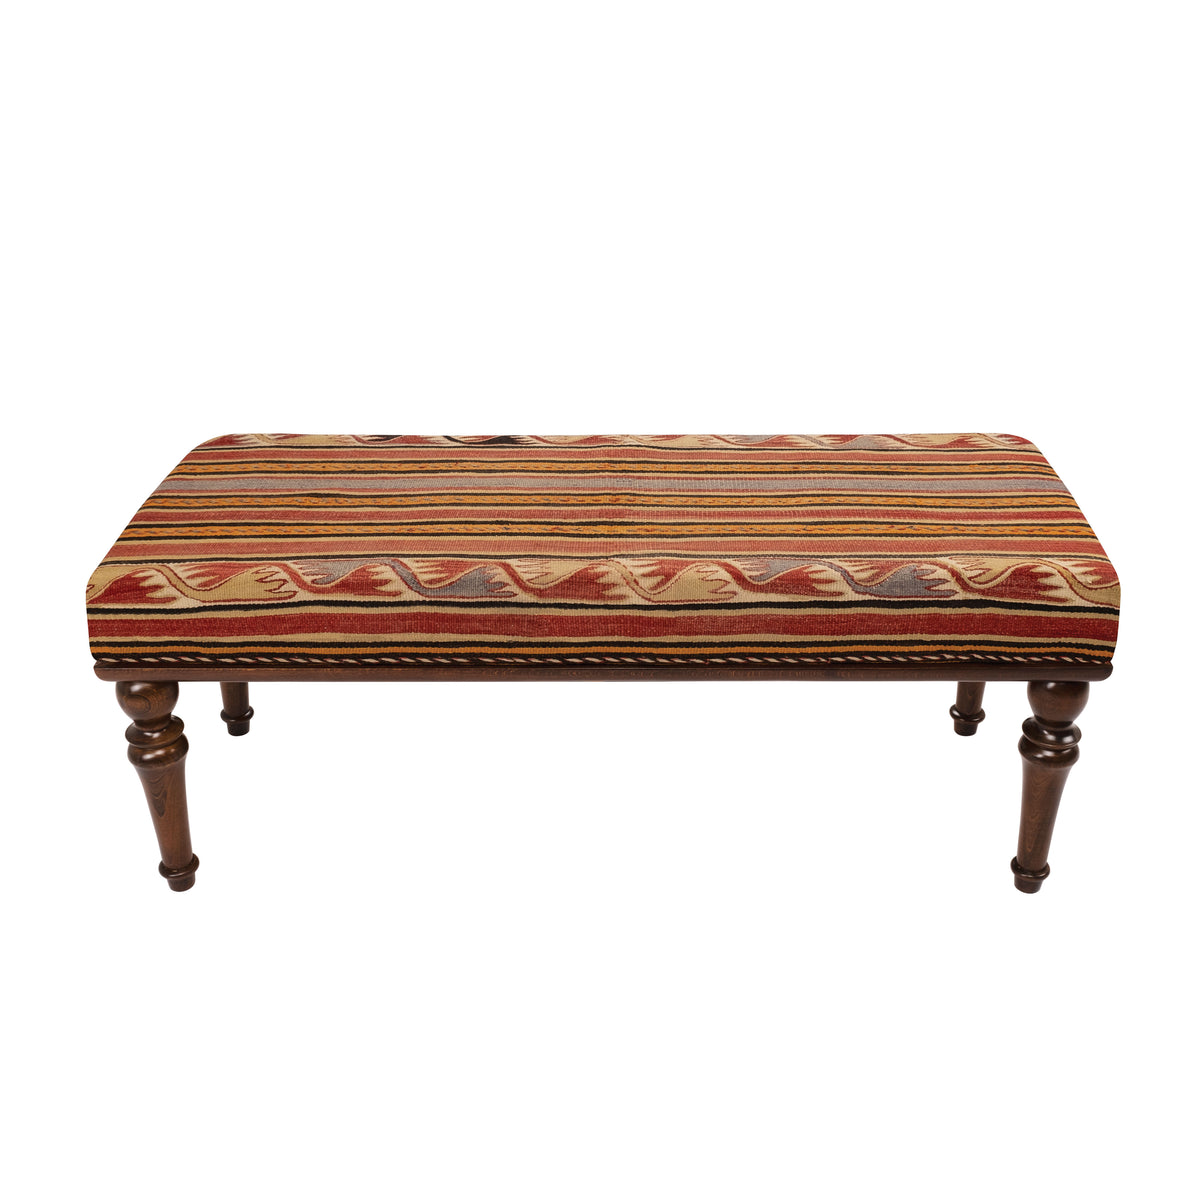 Handmade Vintage Kilim Upholstered Wooden Ottomans